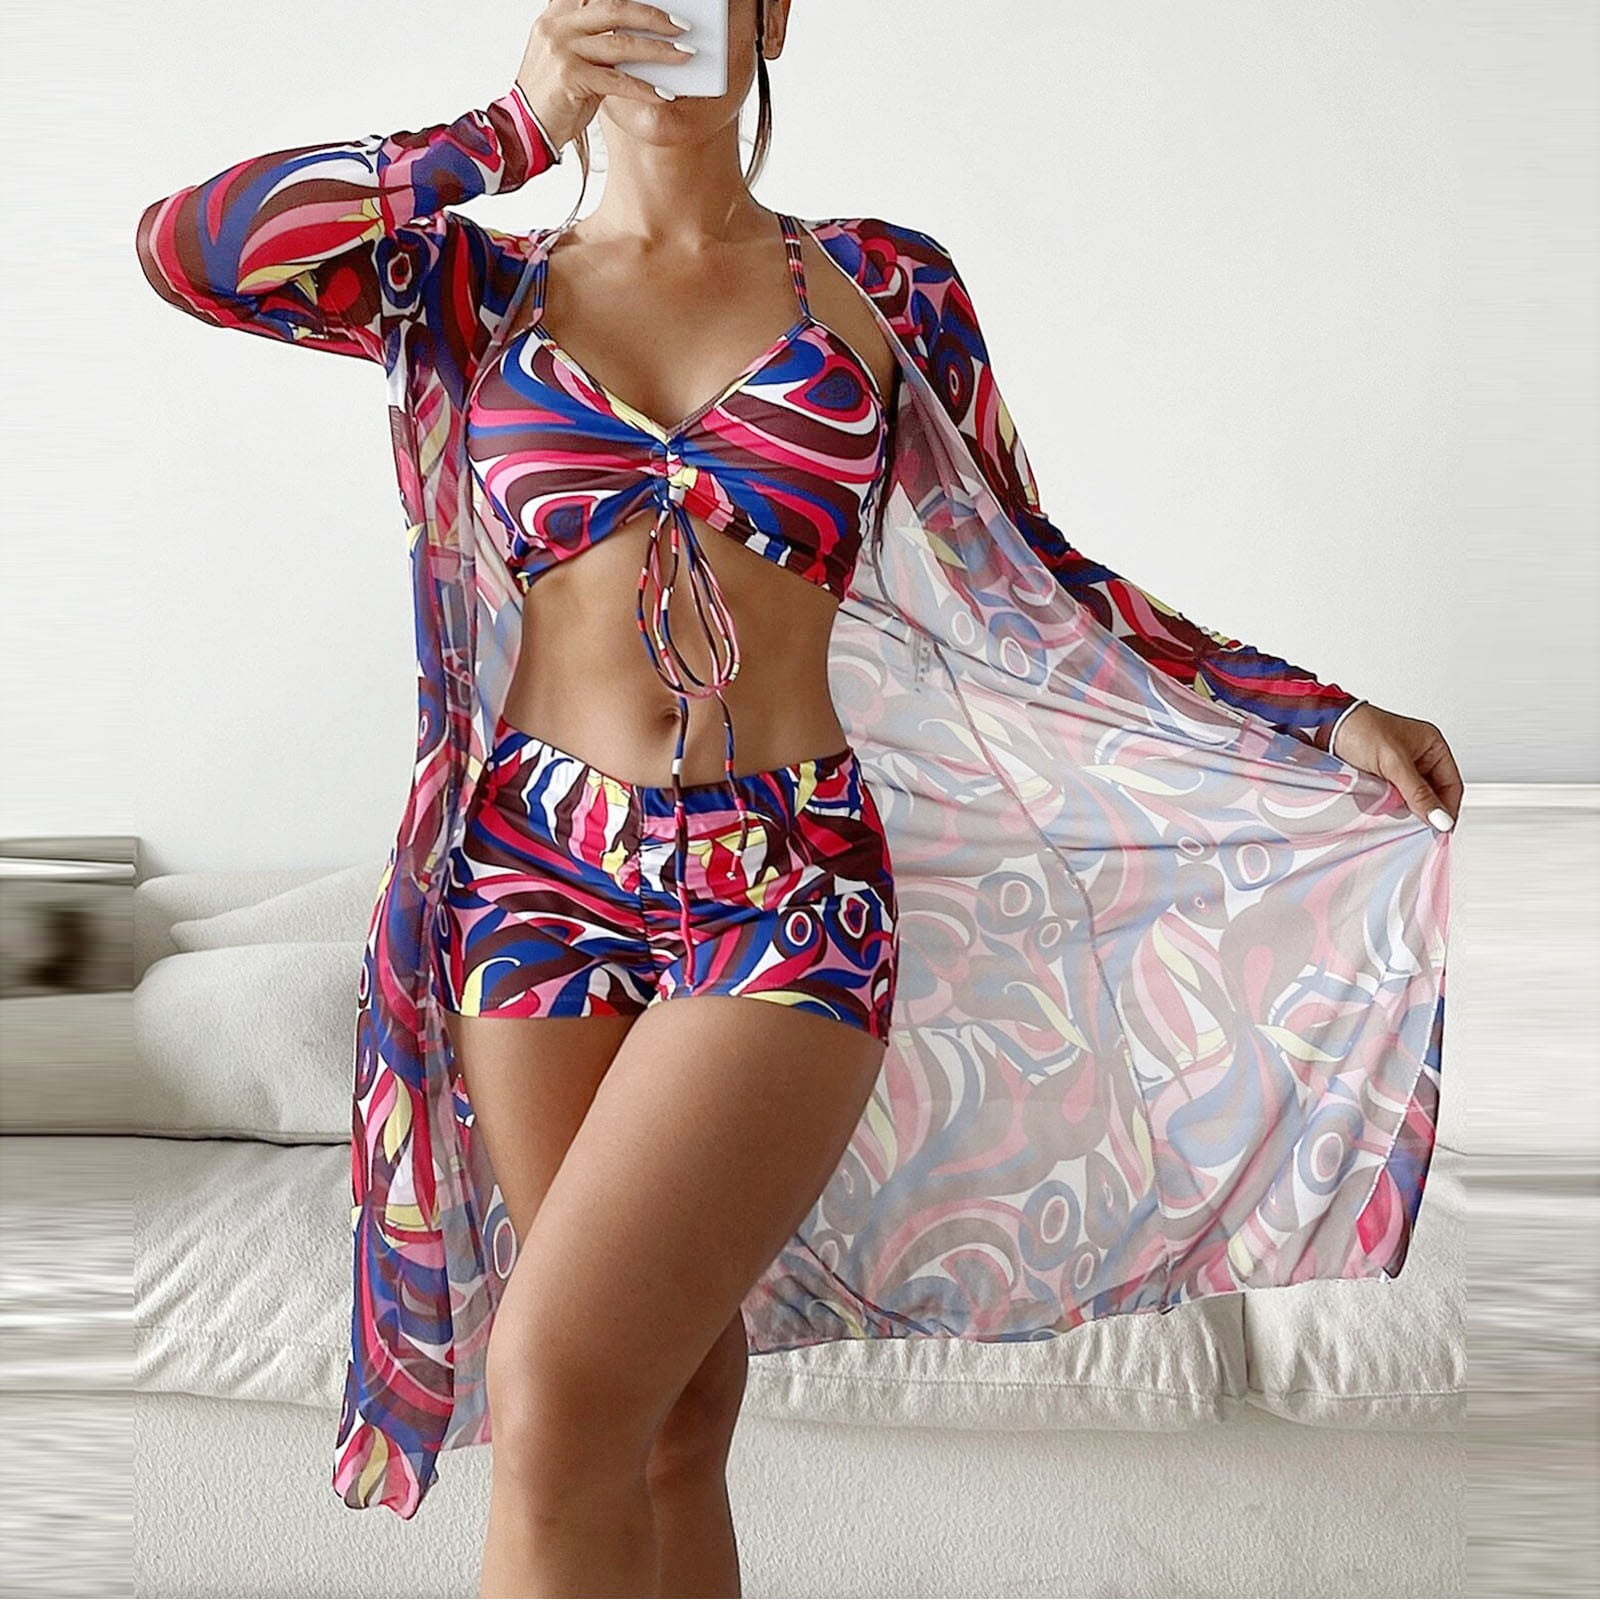 Gubotare Womens Swimsuits Two Piece Bikini Sets for Women High